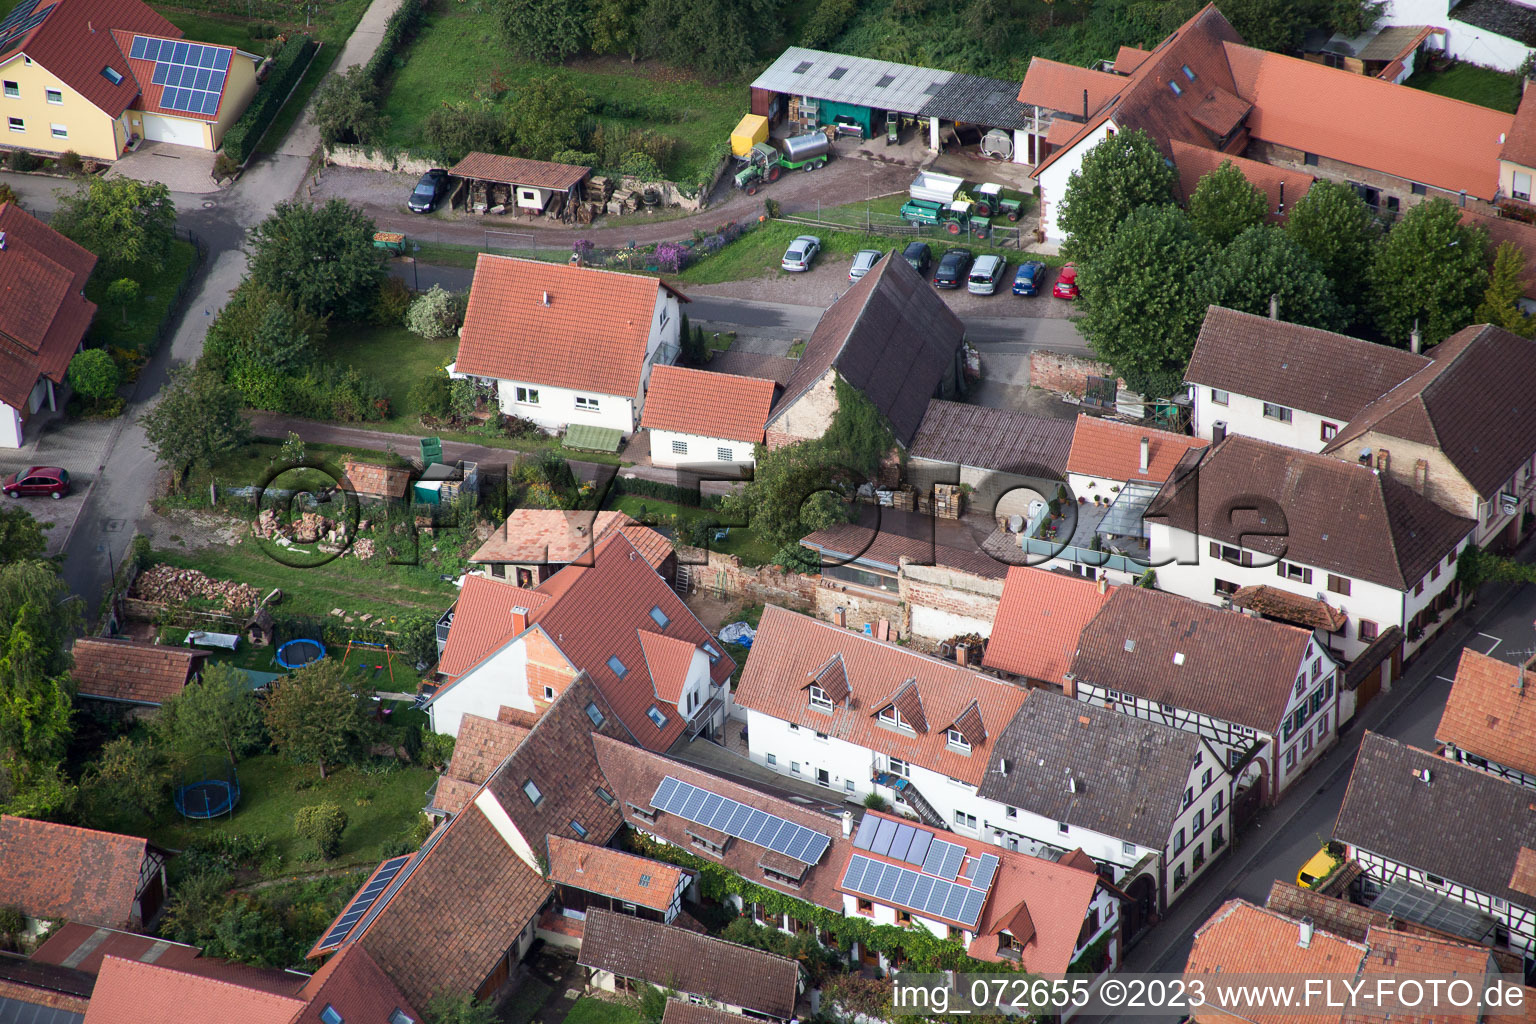 Vue oblique de Quartier Heuchelheim in Heuchelheim-Klingen dans le département Rhénanie-Palatinat, Allemagne